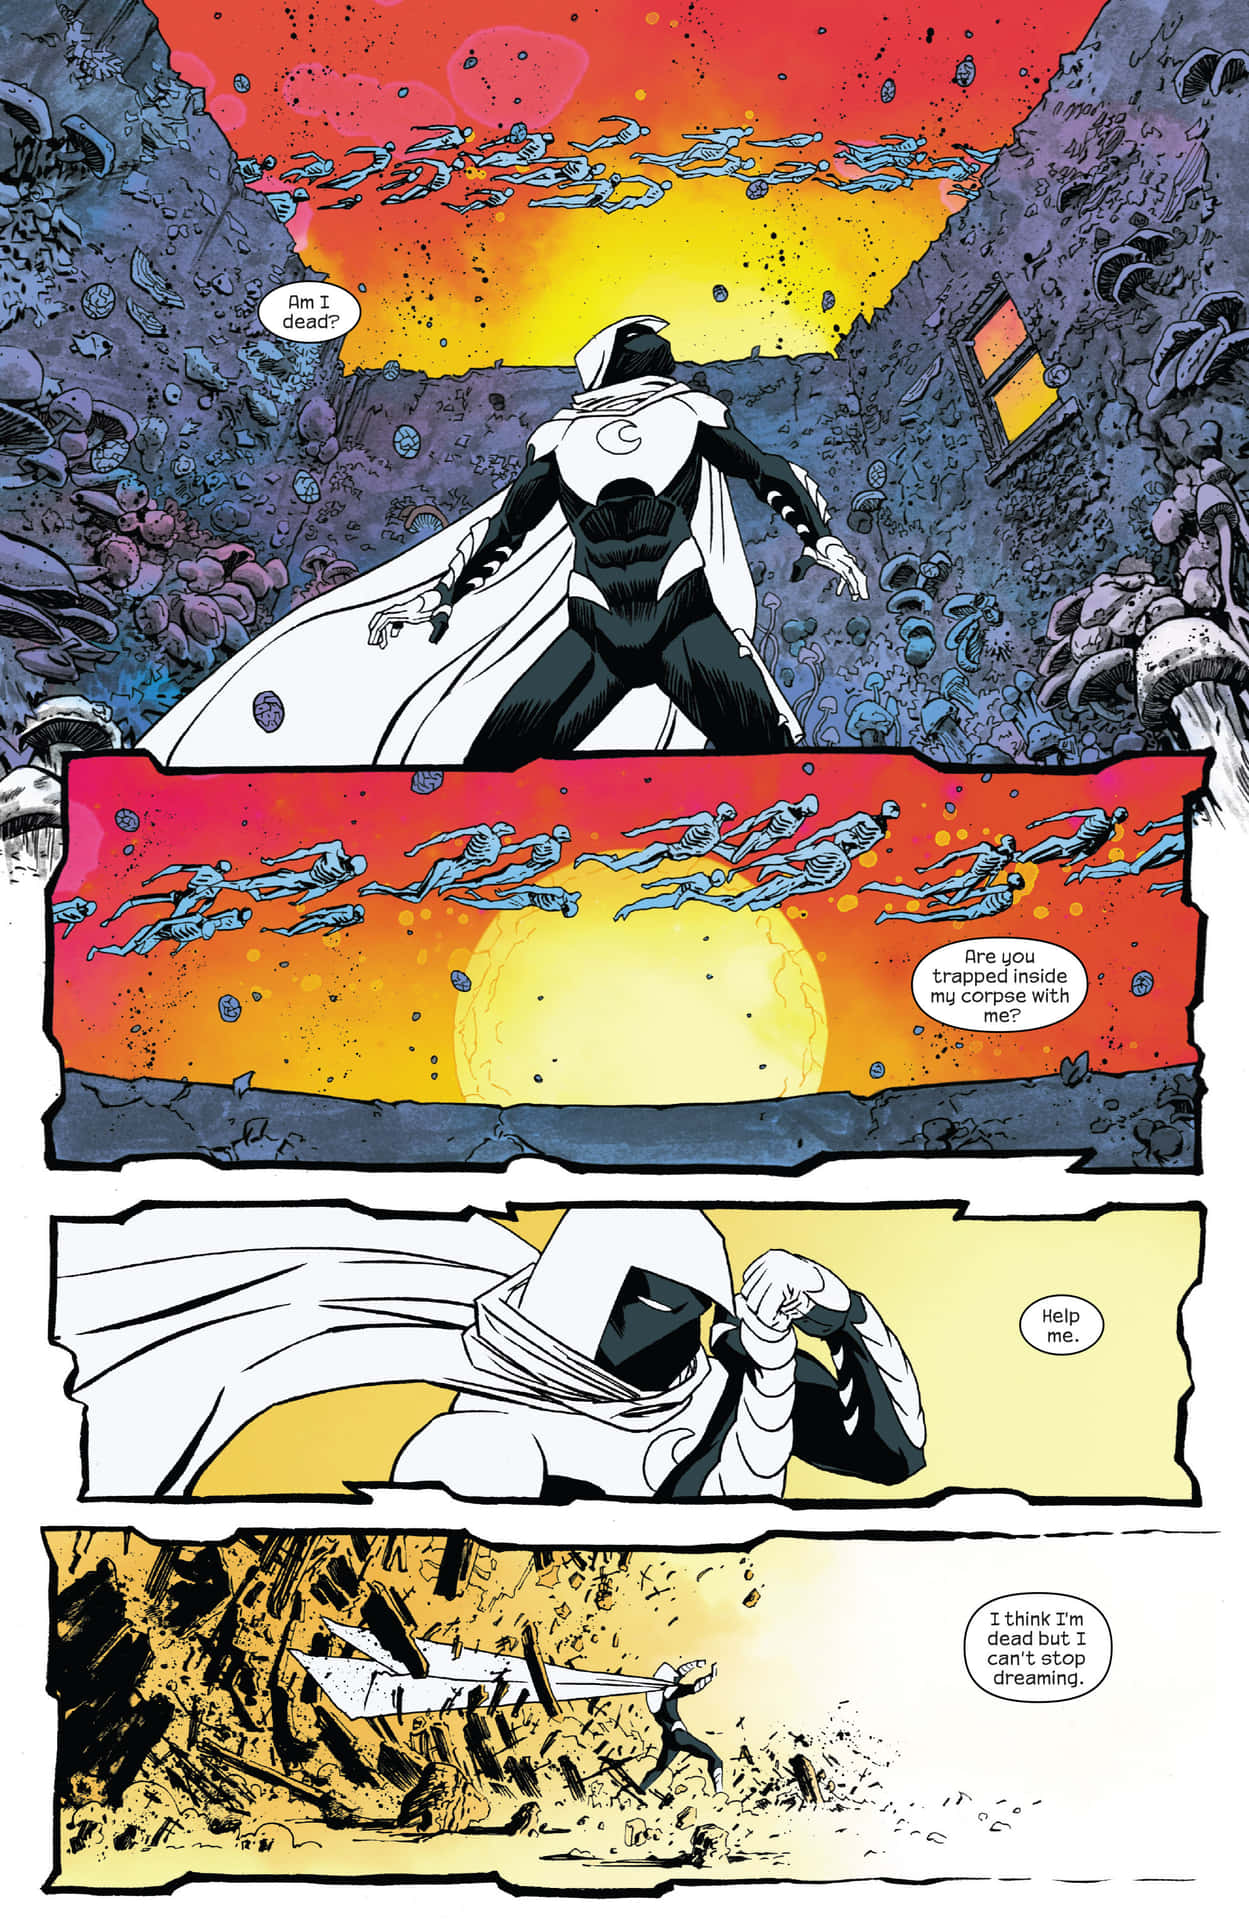 Marvel's Moon Knight Shines in the Moonlight